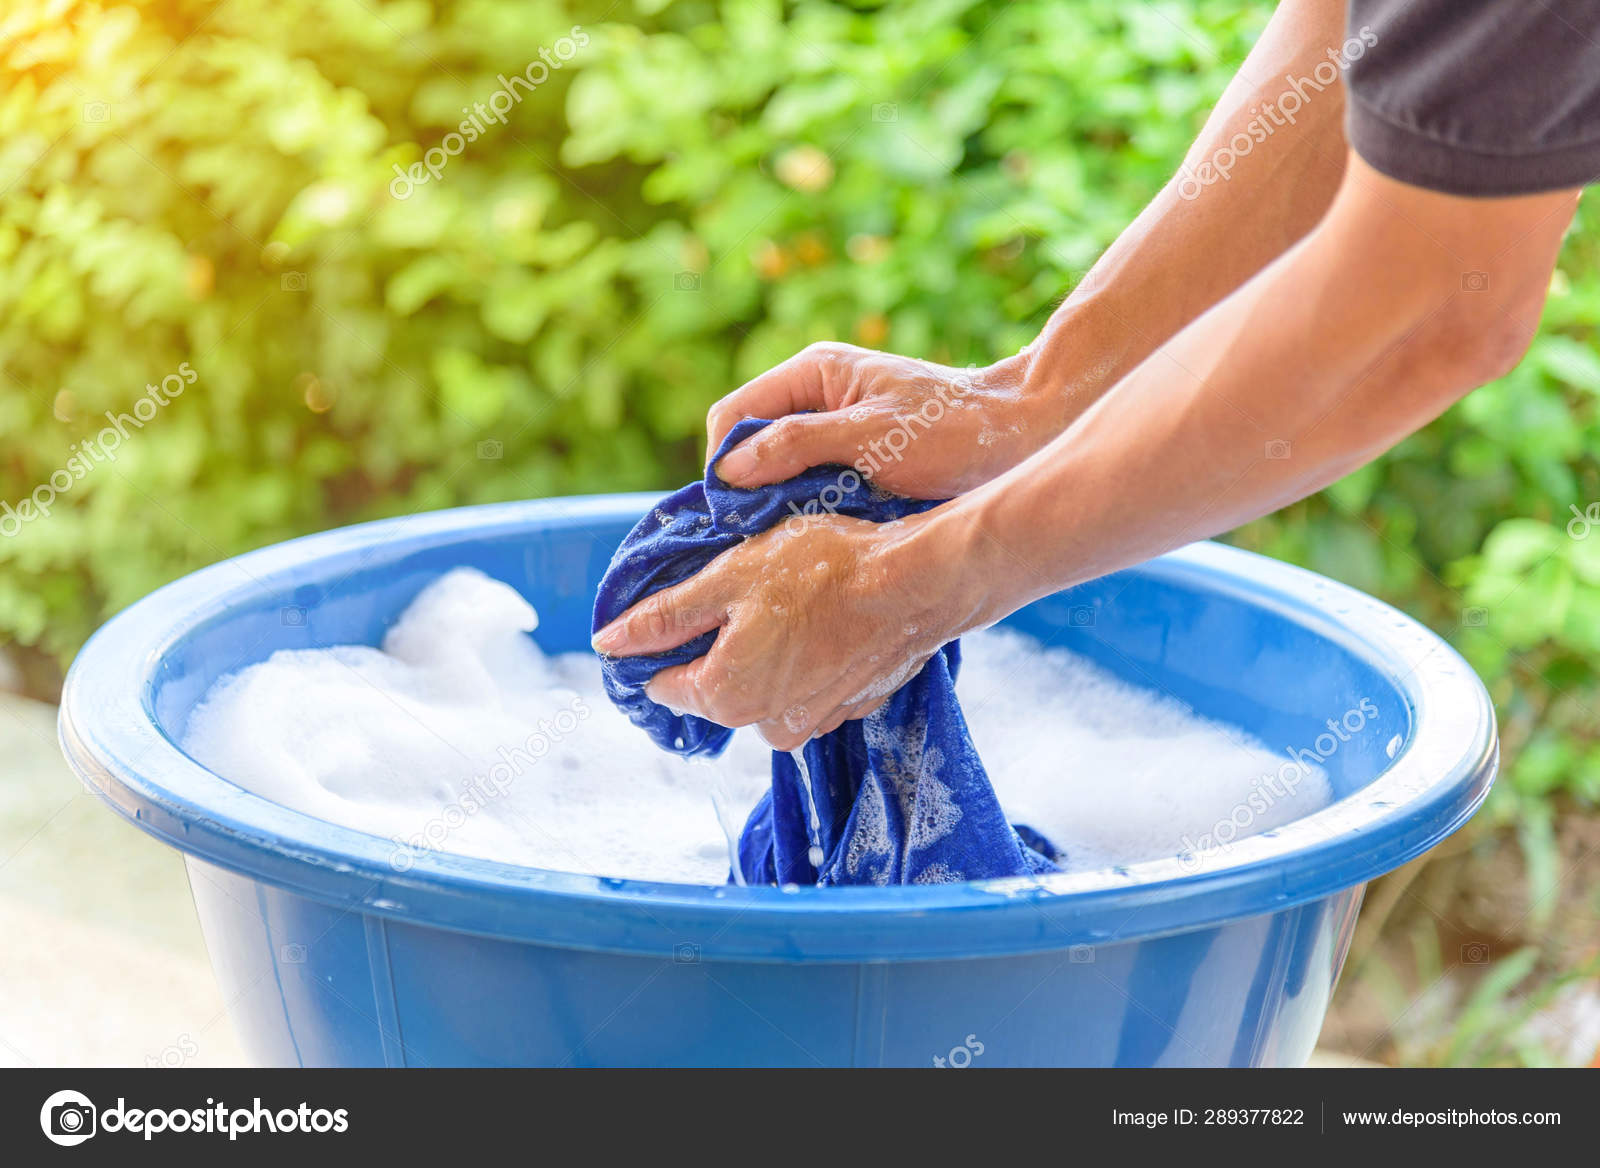 https://st4.depositphotos.com/3608725/28937/i/1600/depositphotos_289377822-stock-photo-hand-washing-clothes-blue-basin.jpg